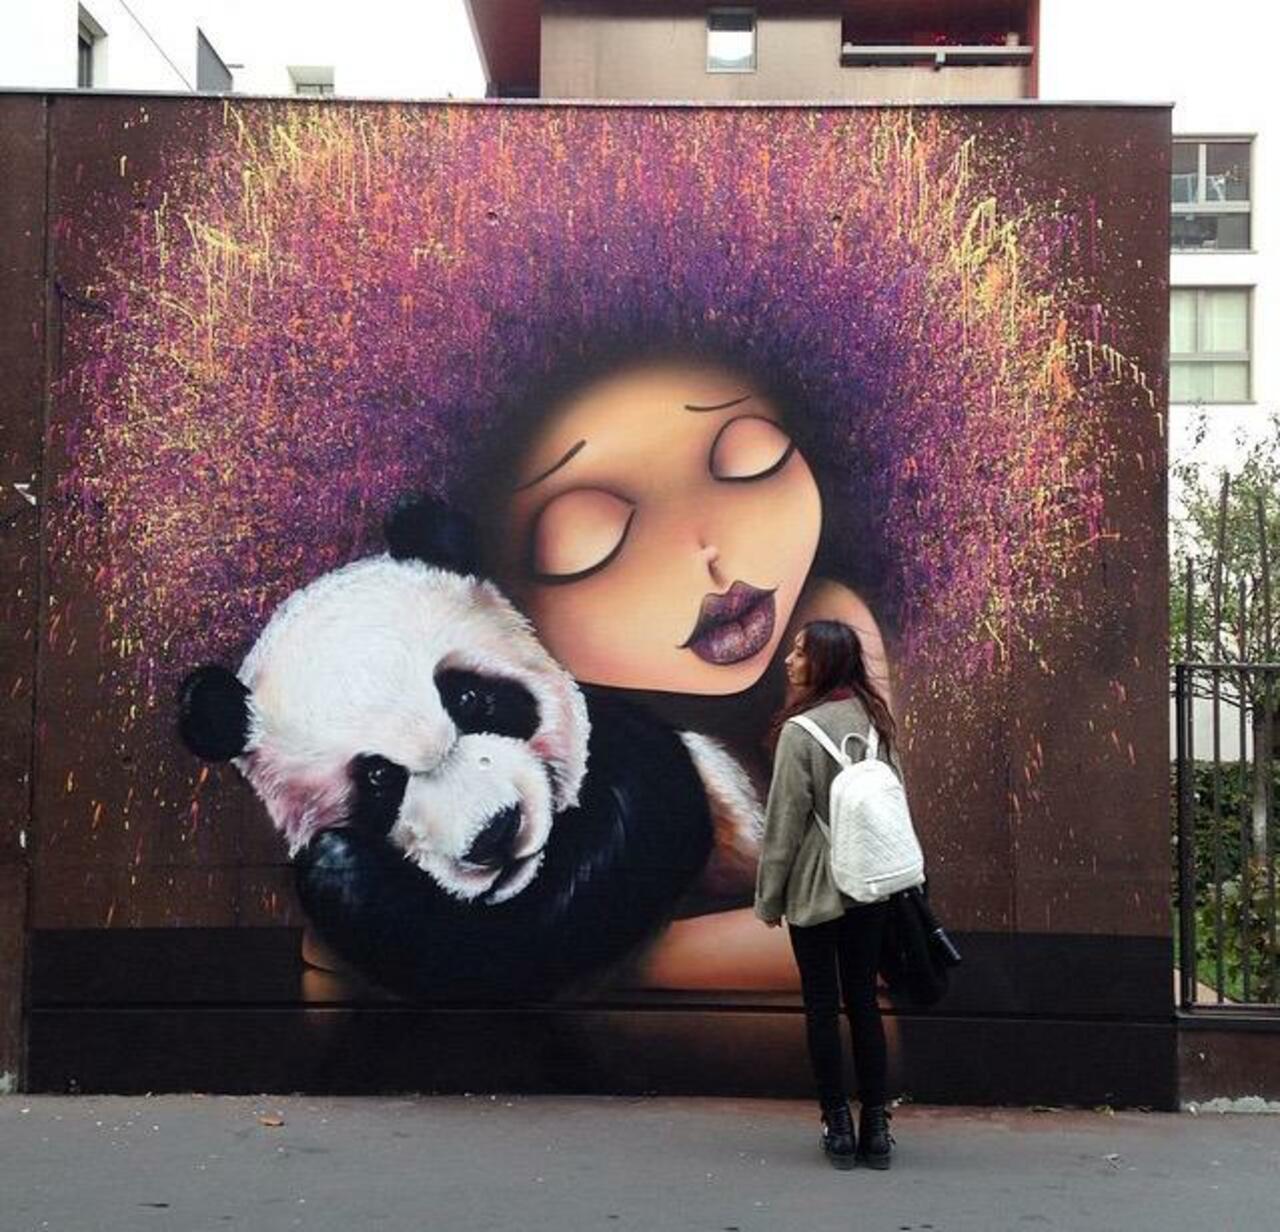 Street Art by VinieGraffiti in Paris 

#art #graffiti #mural #streetart http://t.co/NQKw7bATOo